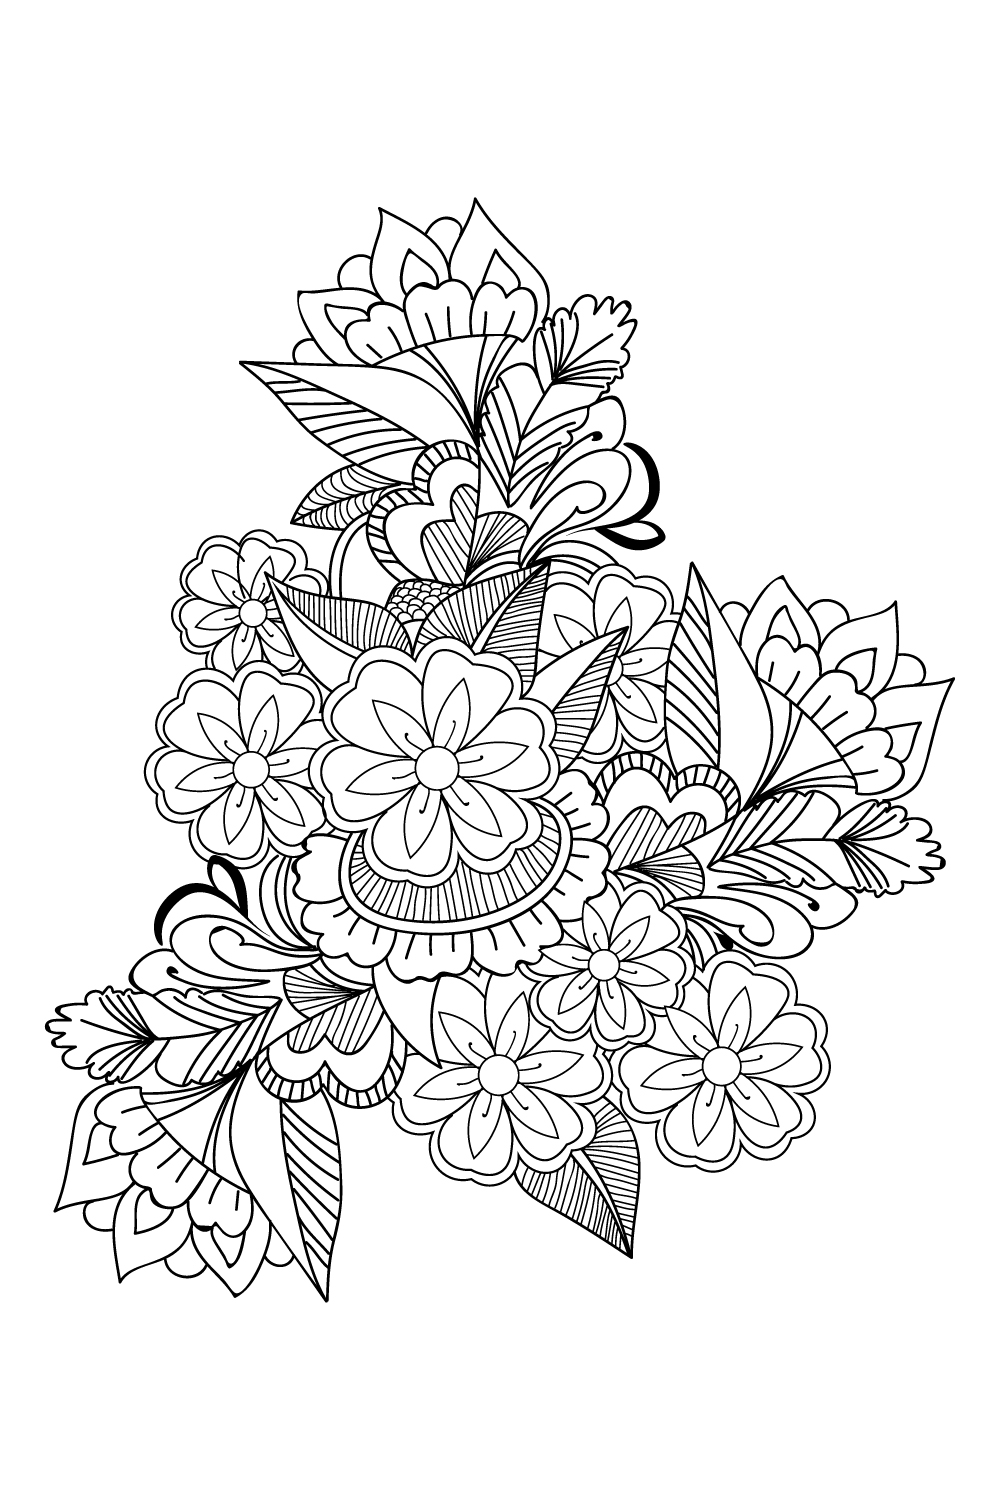 Doodle flower bouquet of line art, lovely design Easy sketch art of peony flower, line art bouquets of floral hand drawn illustration, doodle zentangle, pinterest preview image.